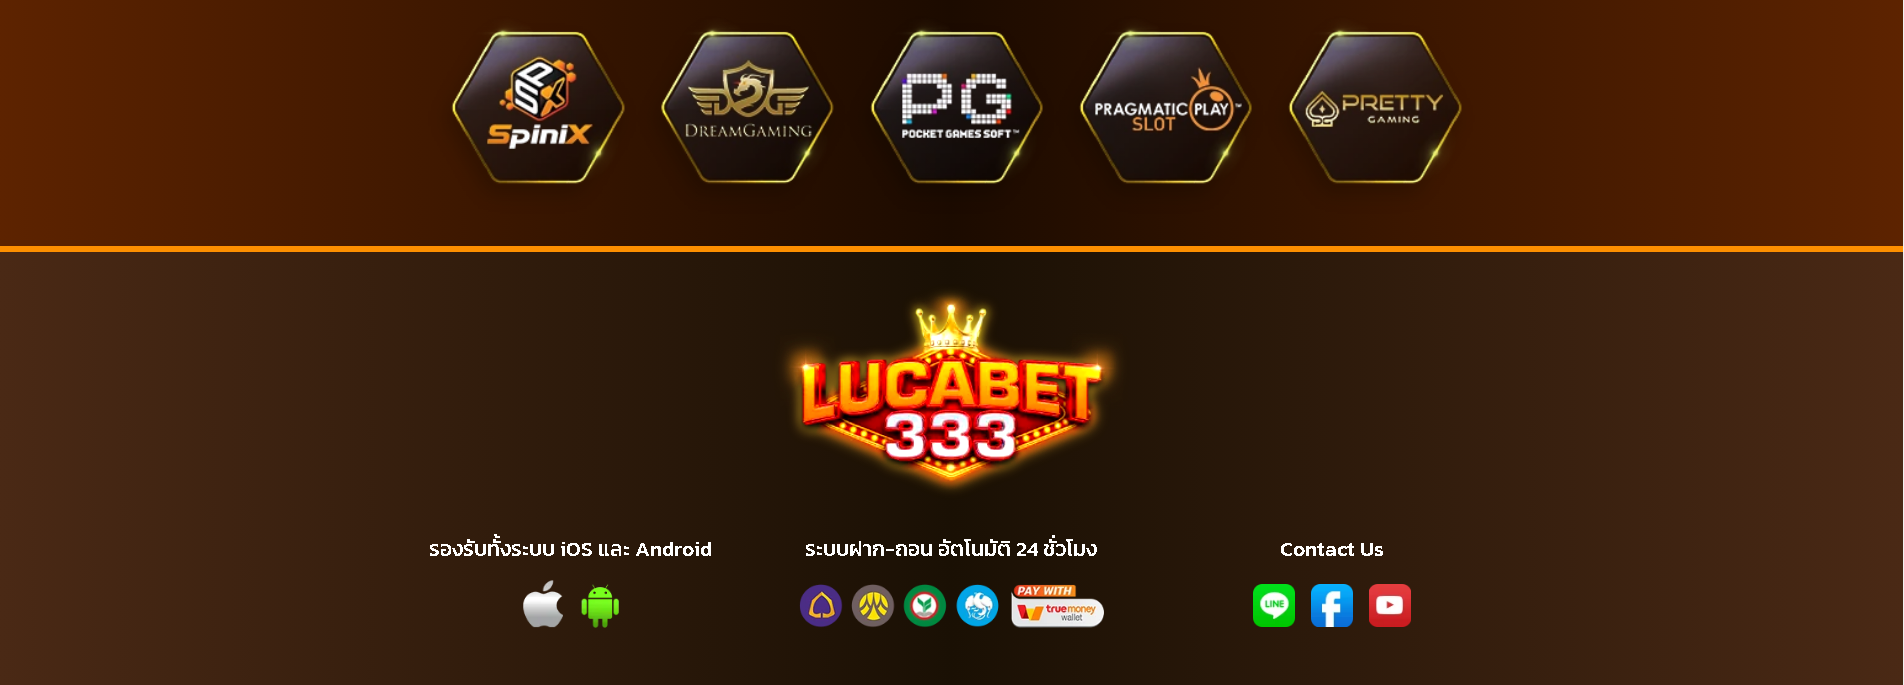 lucabet333